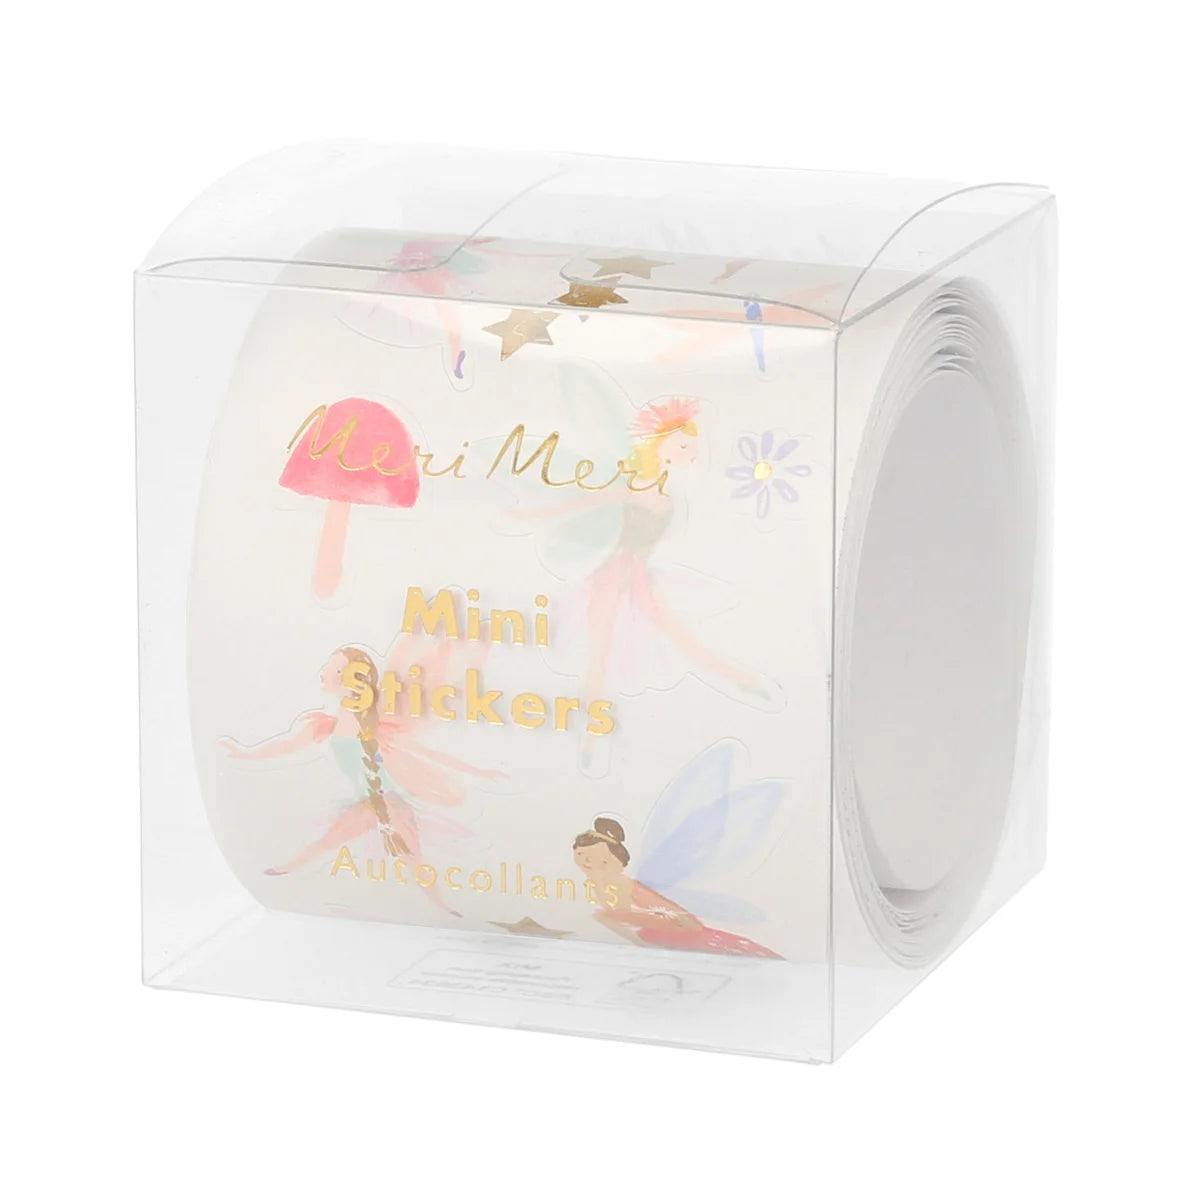 Fairy themed mini stickers sold at ALittleConfetti, by Meri Meri